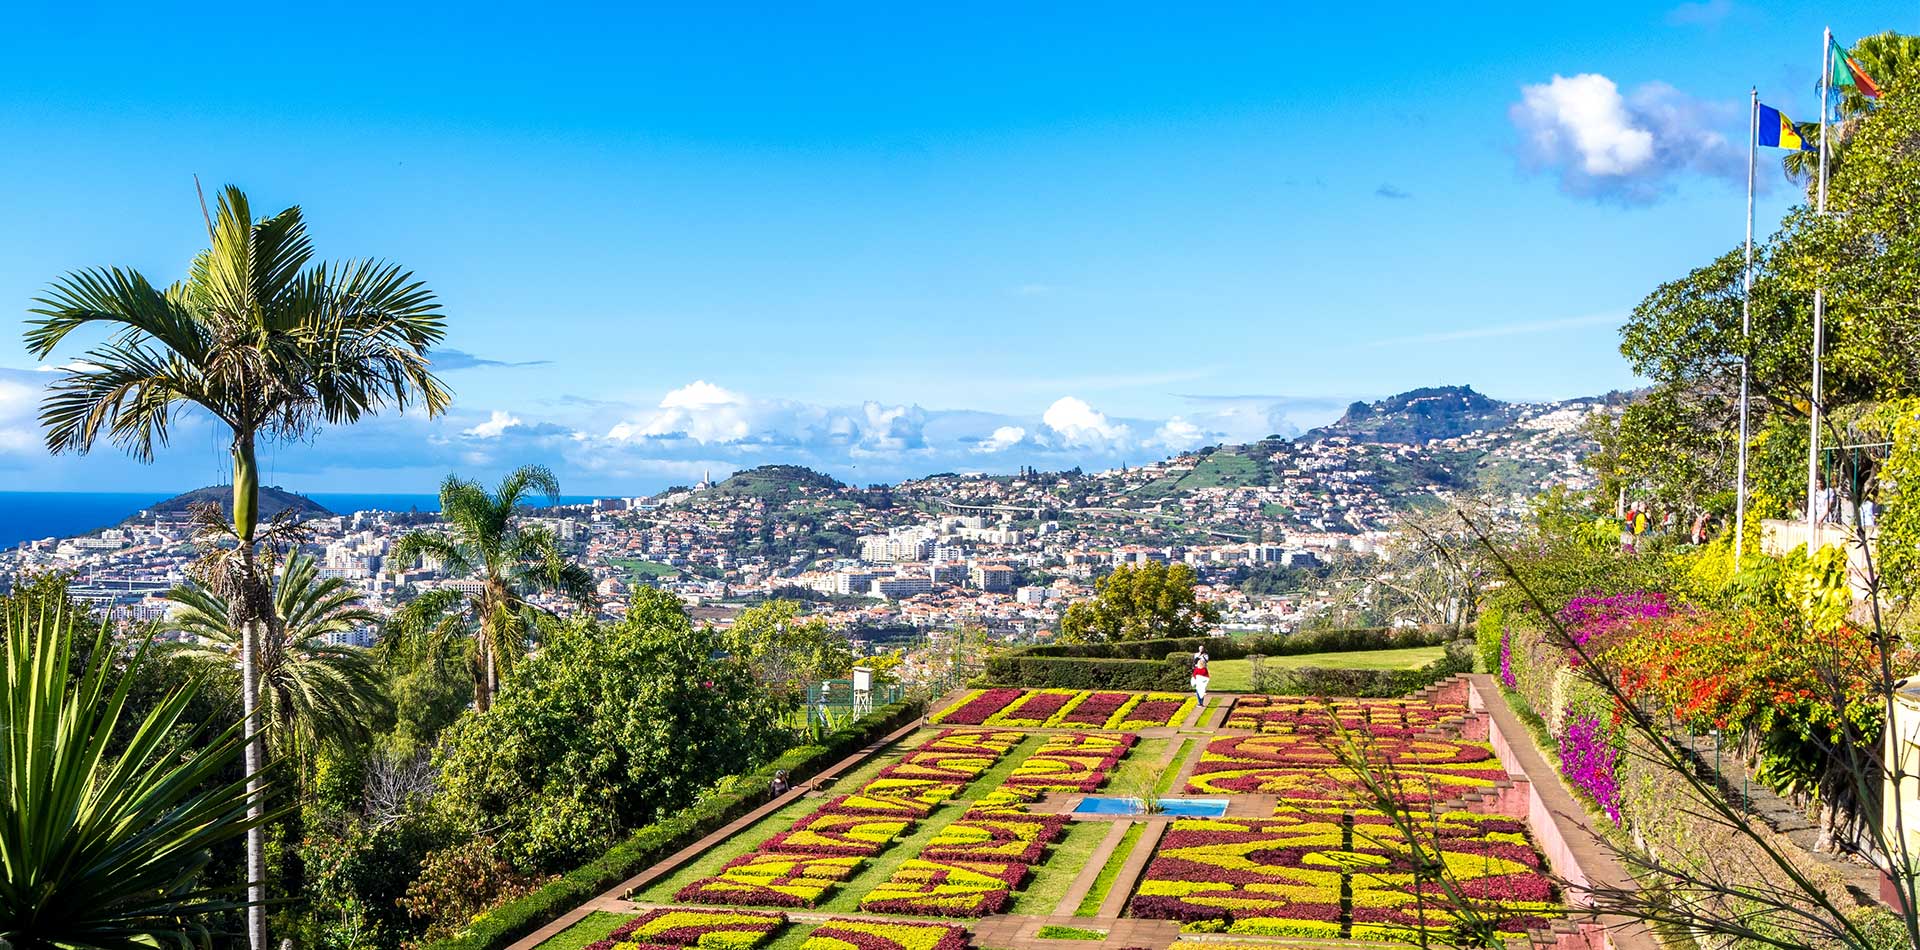 Botanical gardens in Funchal, Madeira